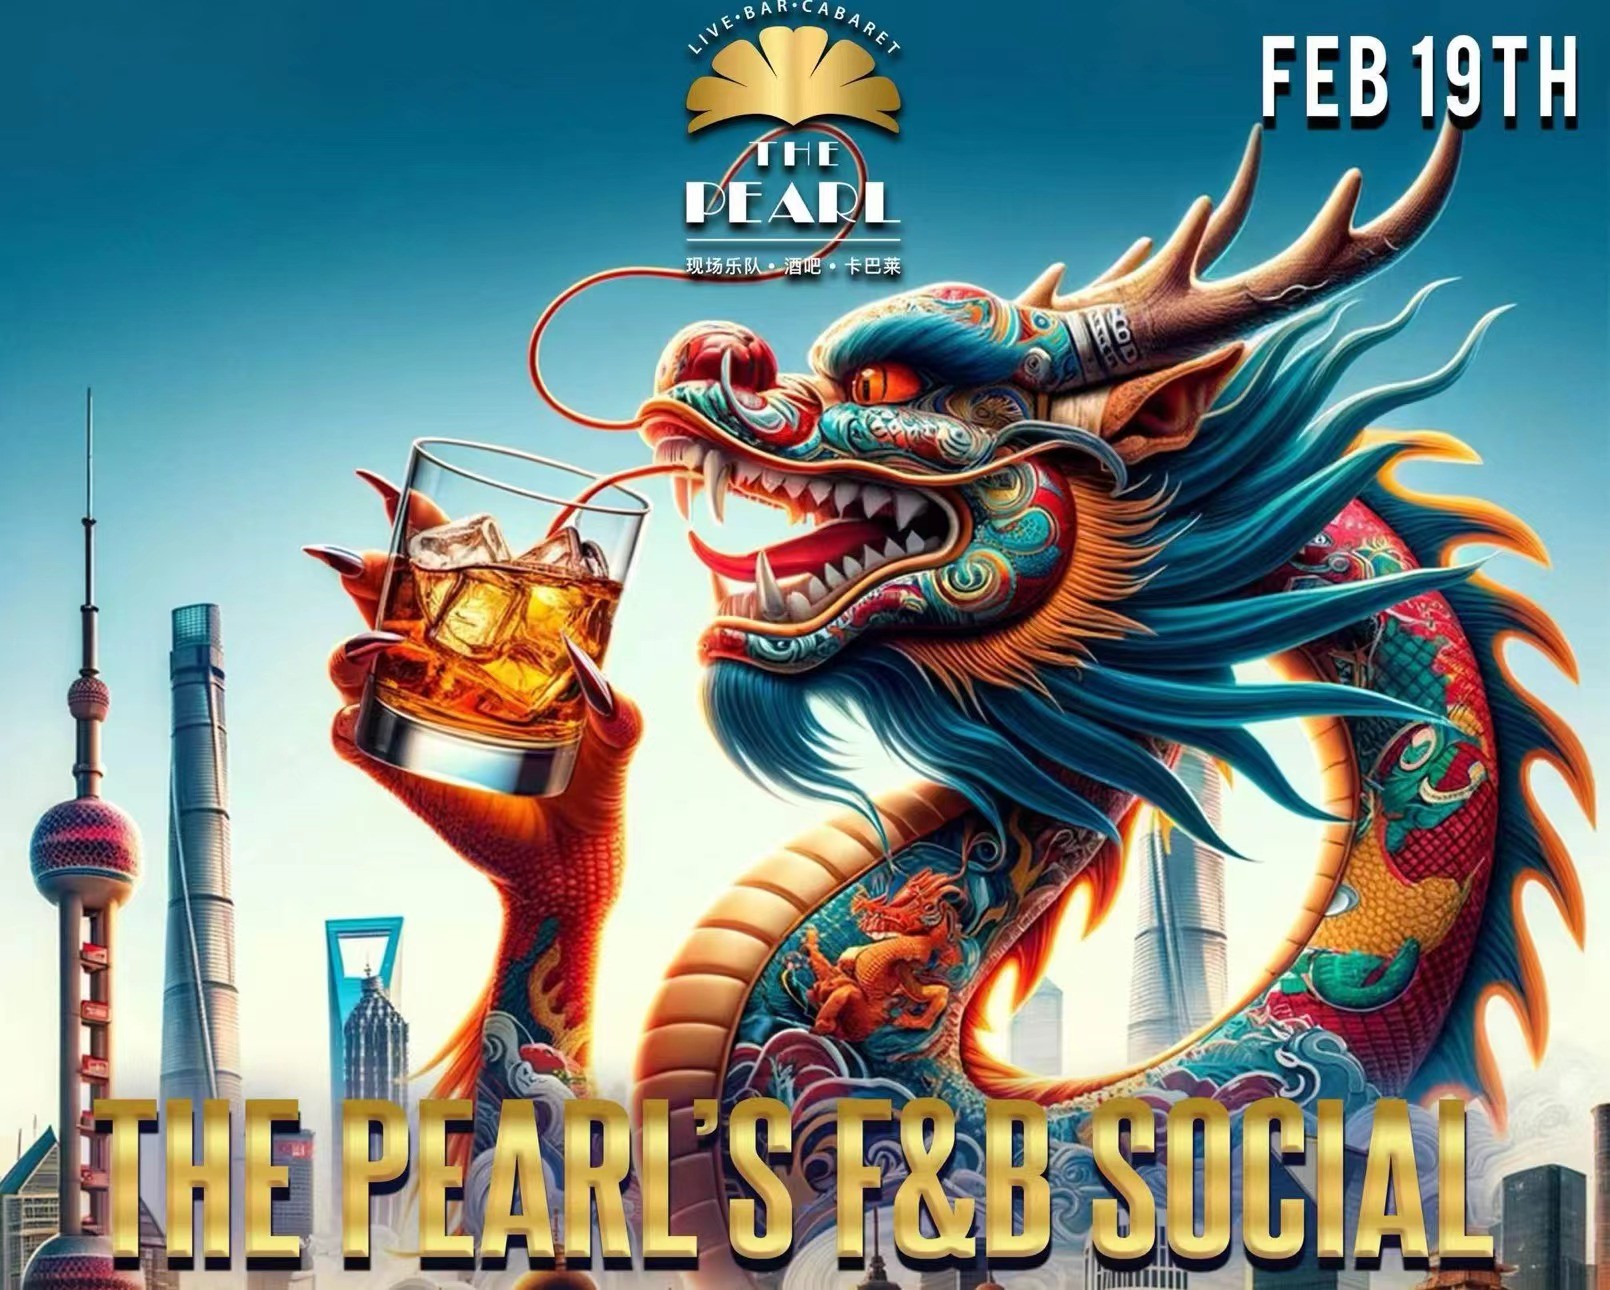 Shanghai F&B Social at The Pearl This Monday